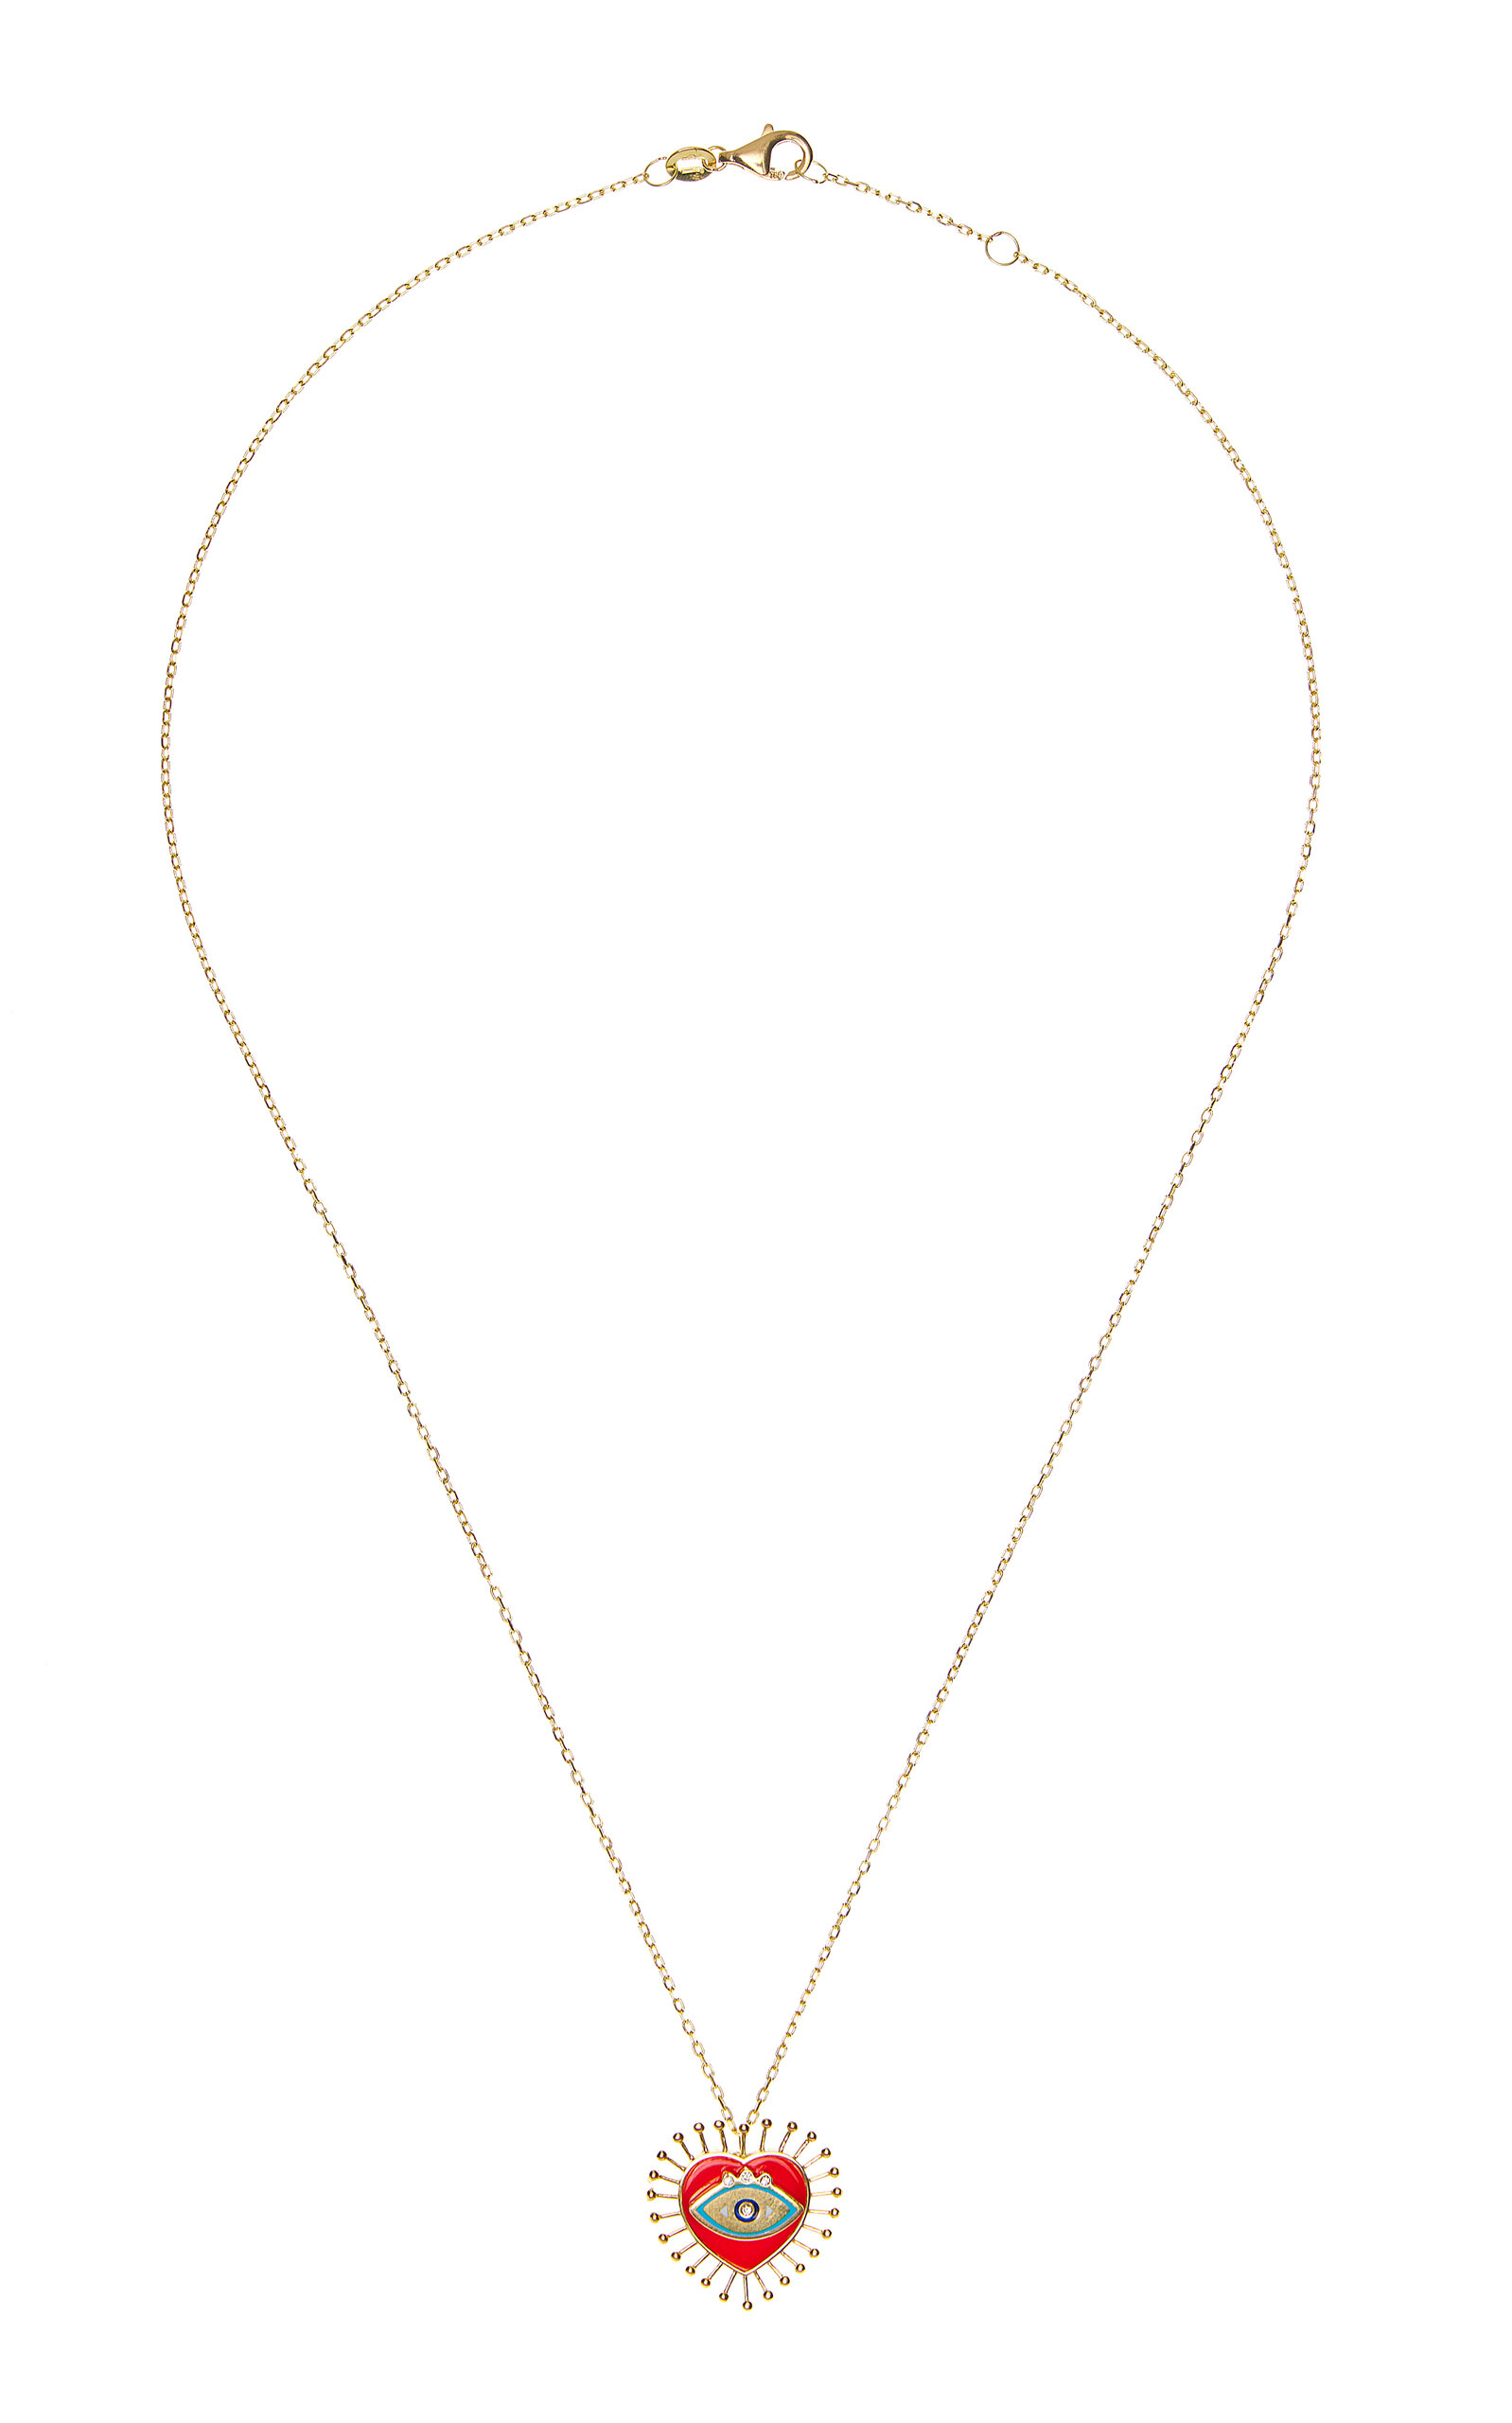 L'Atelier Nawbar Women's Eye Heart U 18K Yellow Gold Pendant Necklace